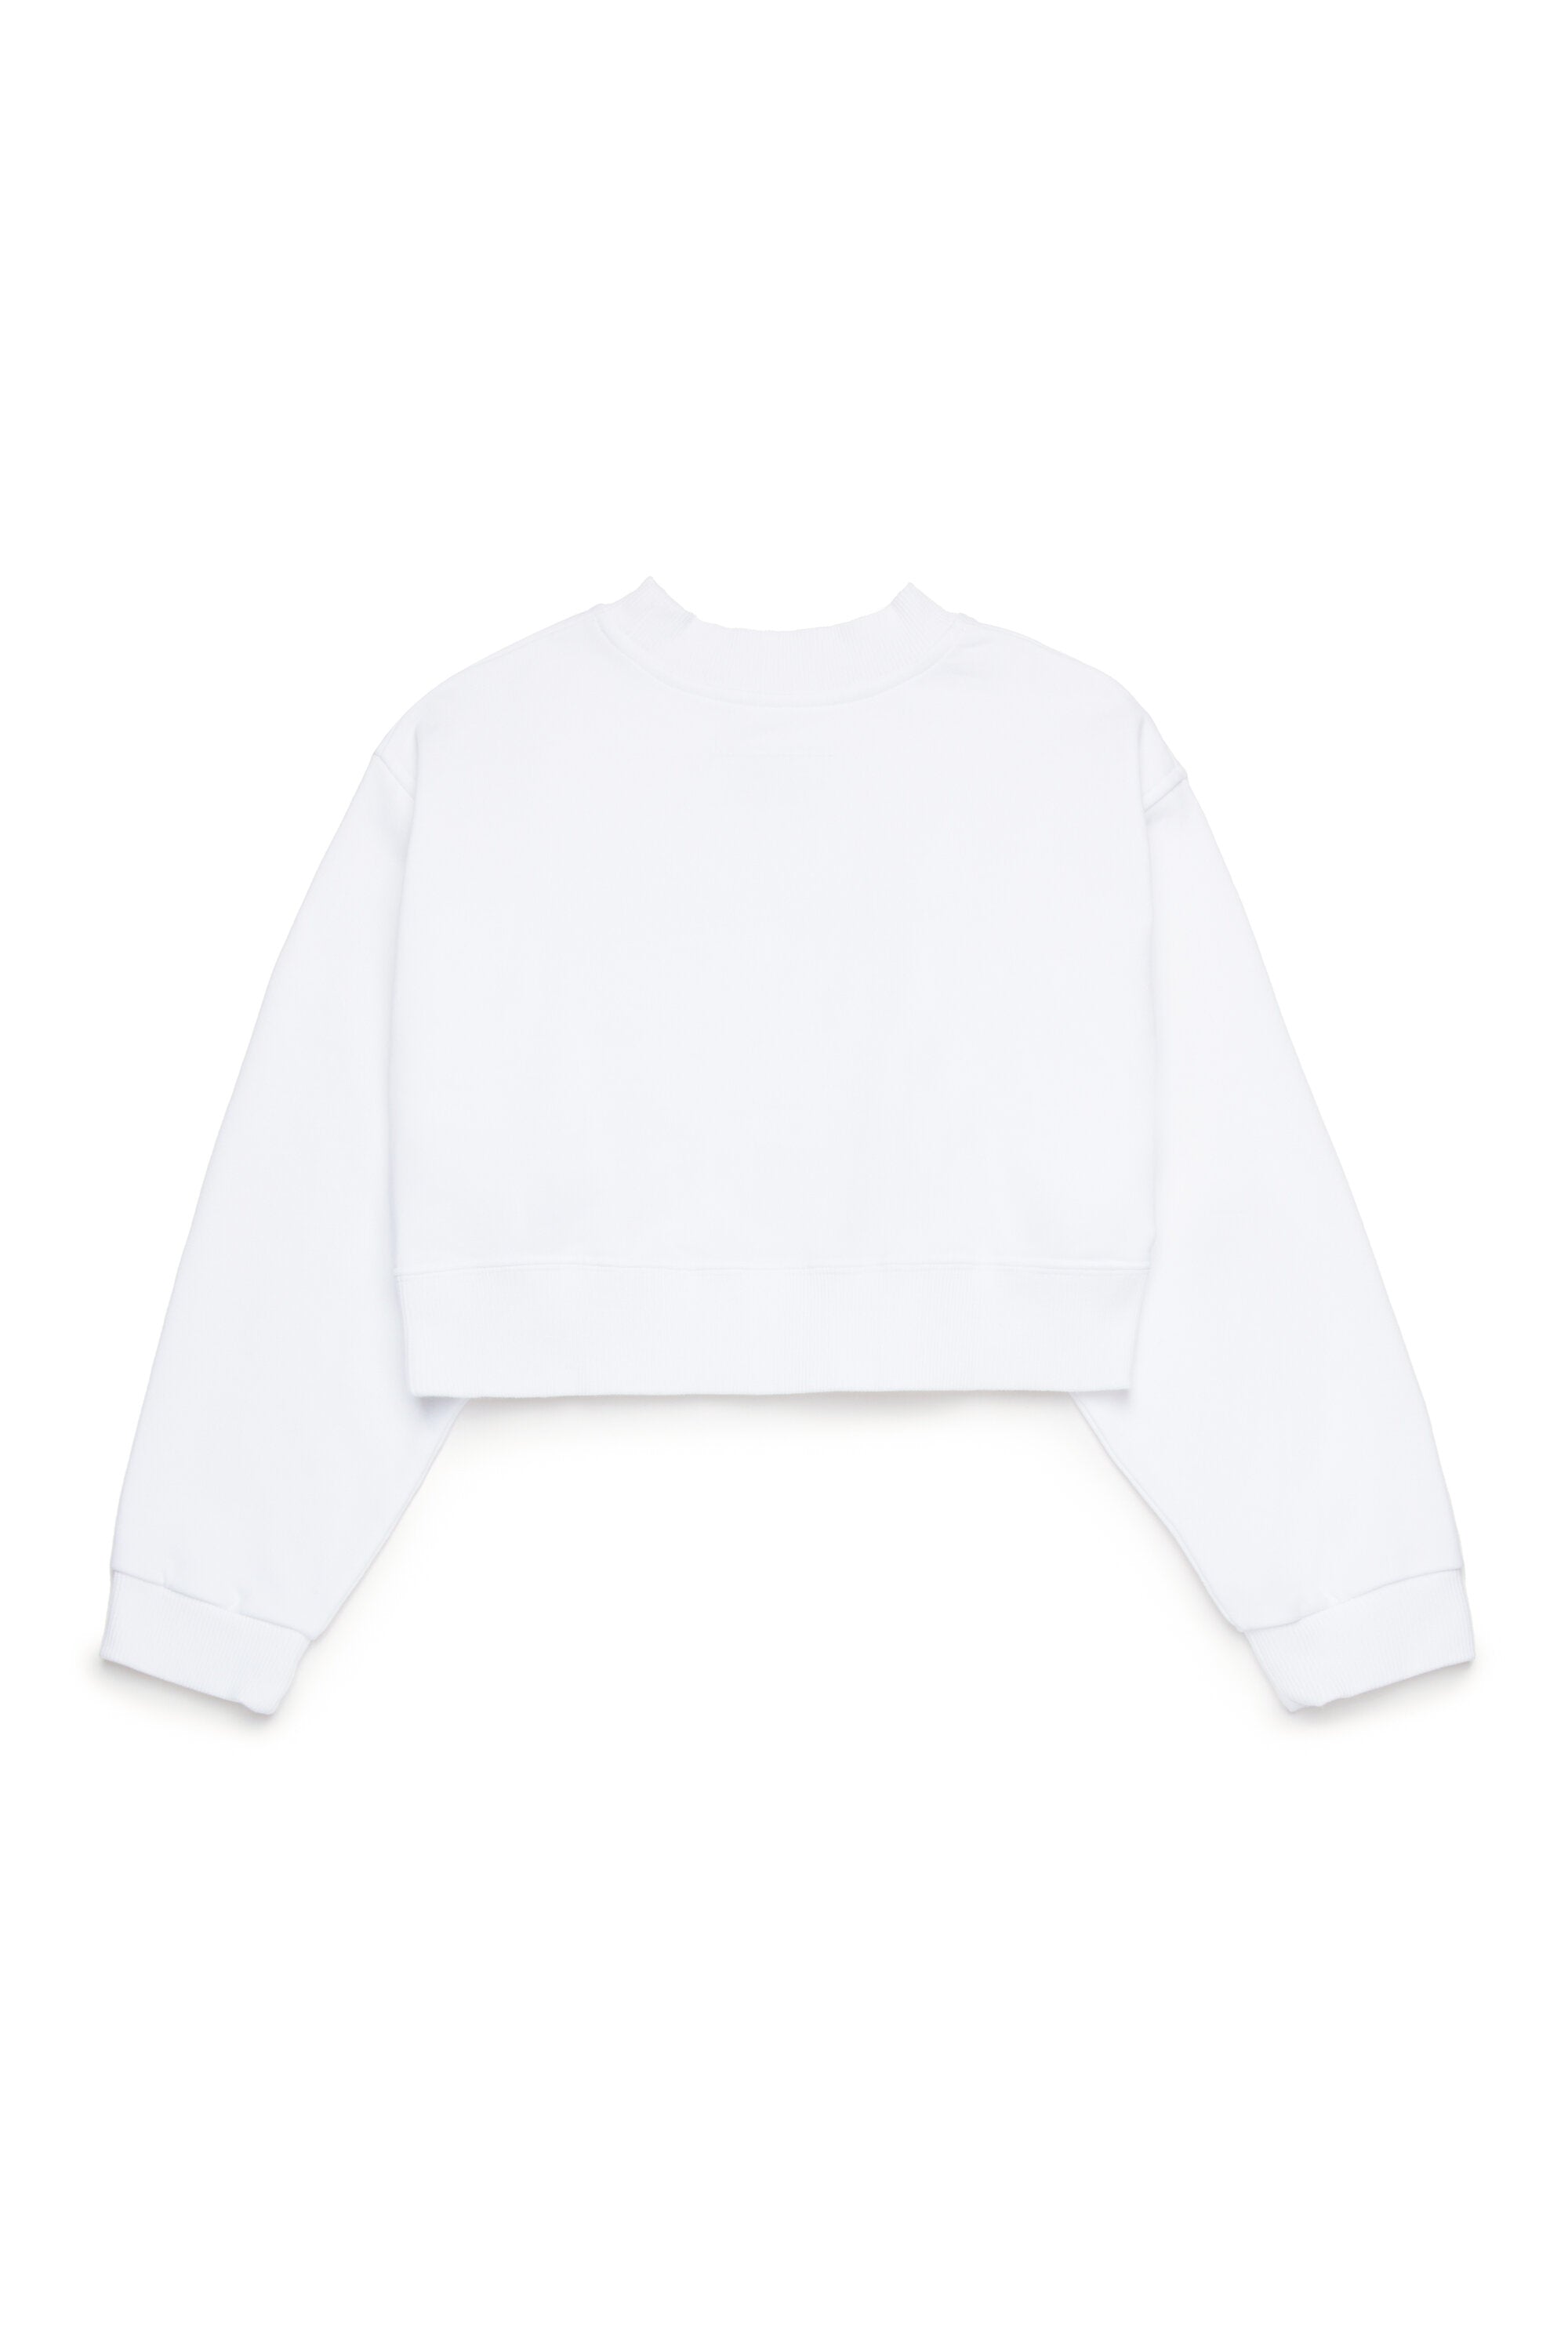 Cropped sweatshirt branded with pixel effect logo